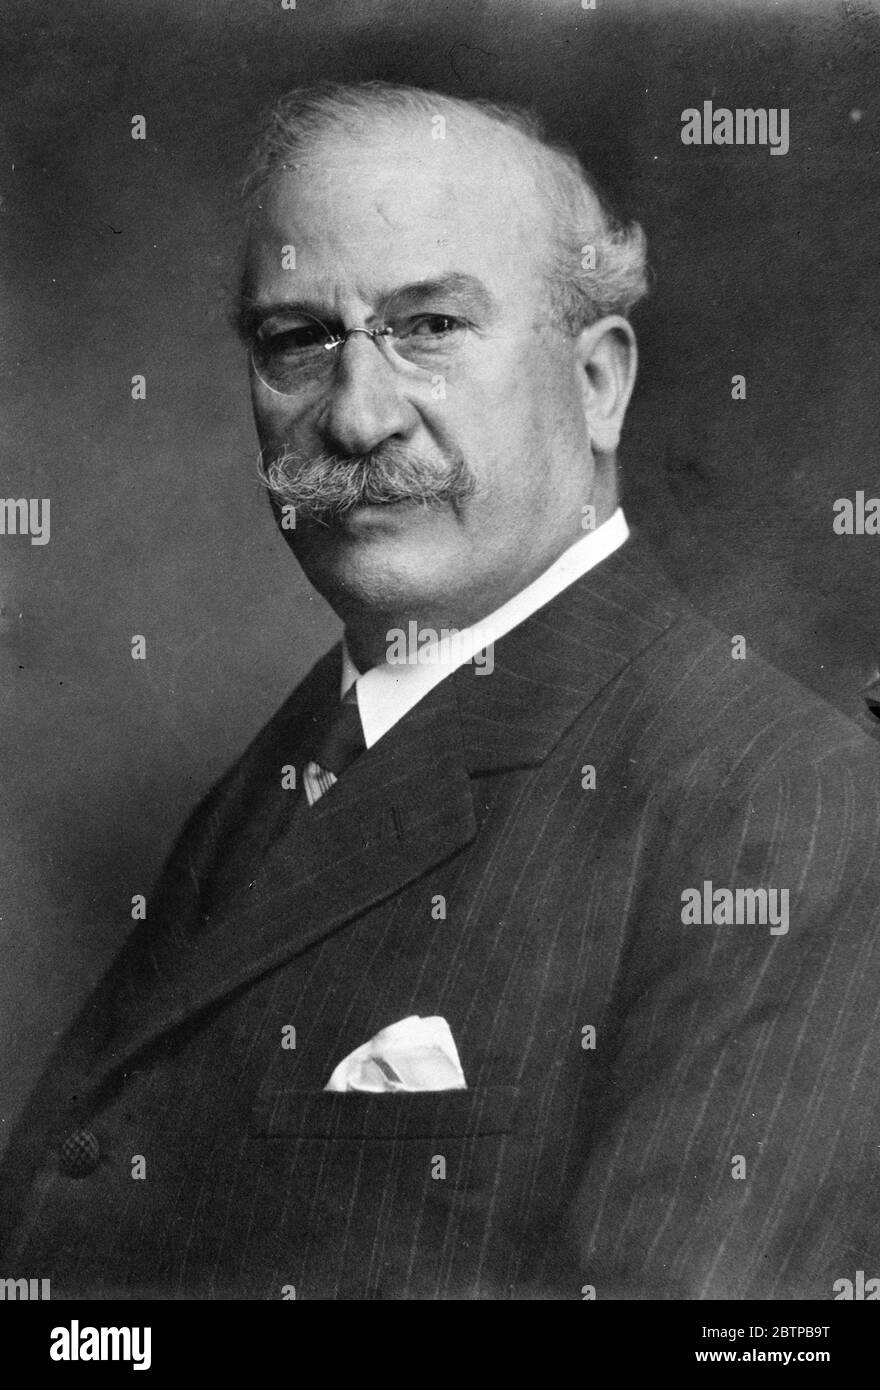 Spanische Prominente . Senor Alejandro Lerroux, ein prominenter Republikaner. Februar 1931 Stockfoto